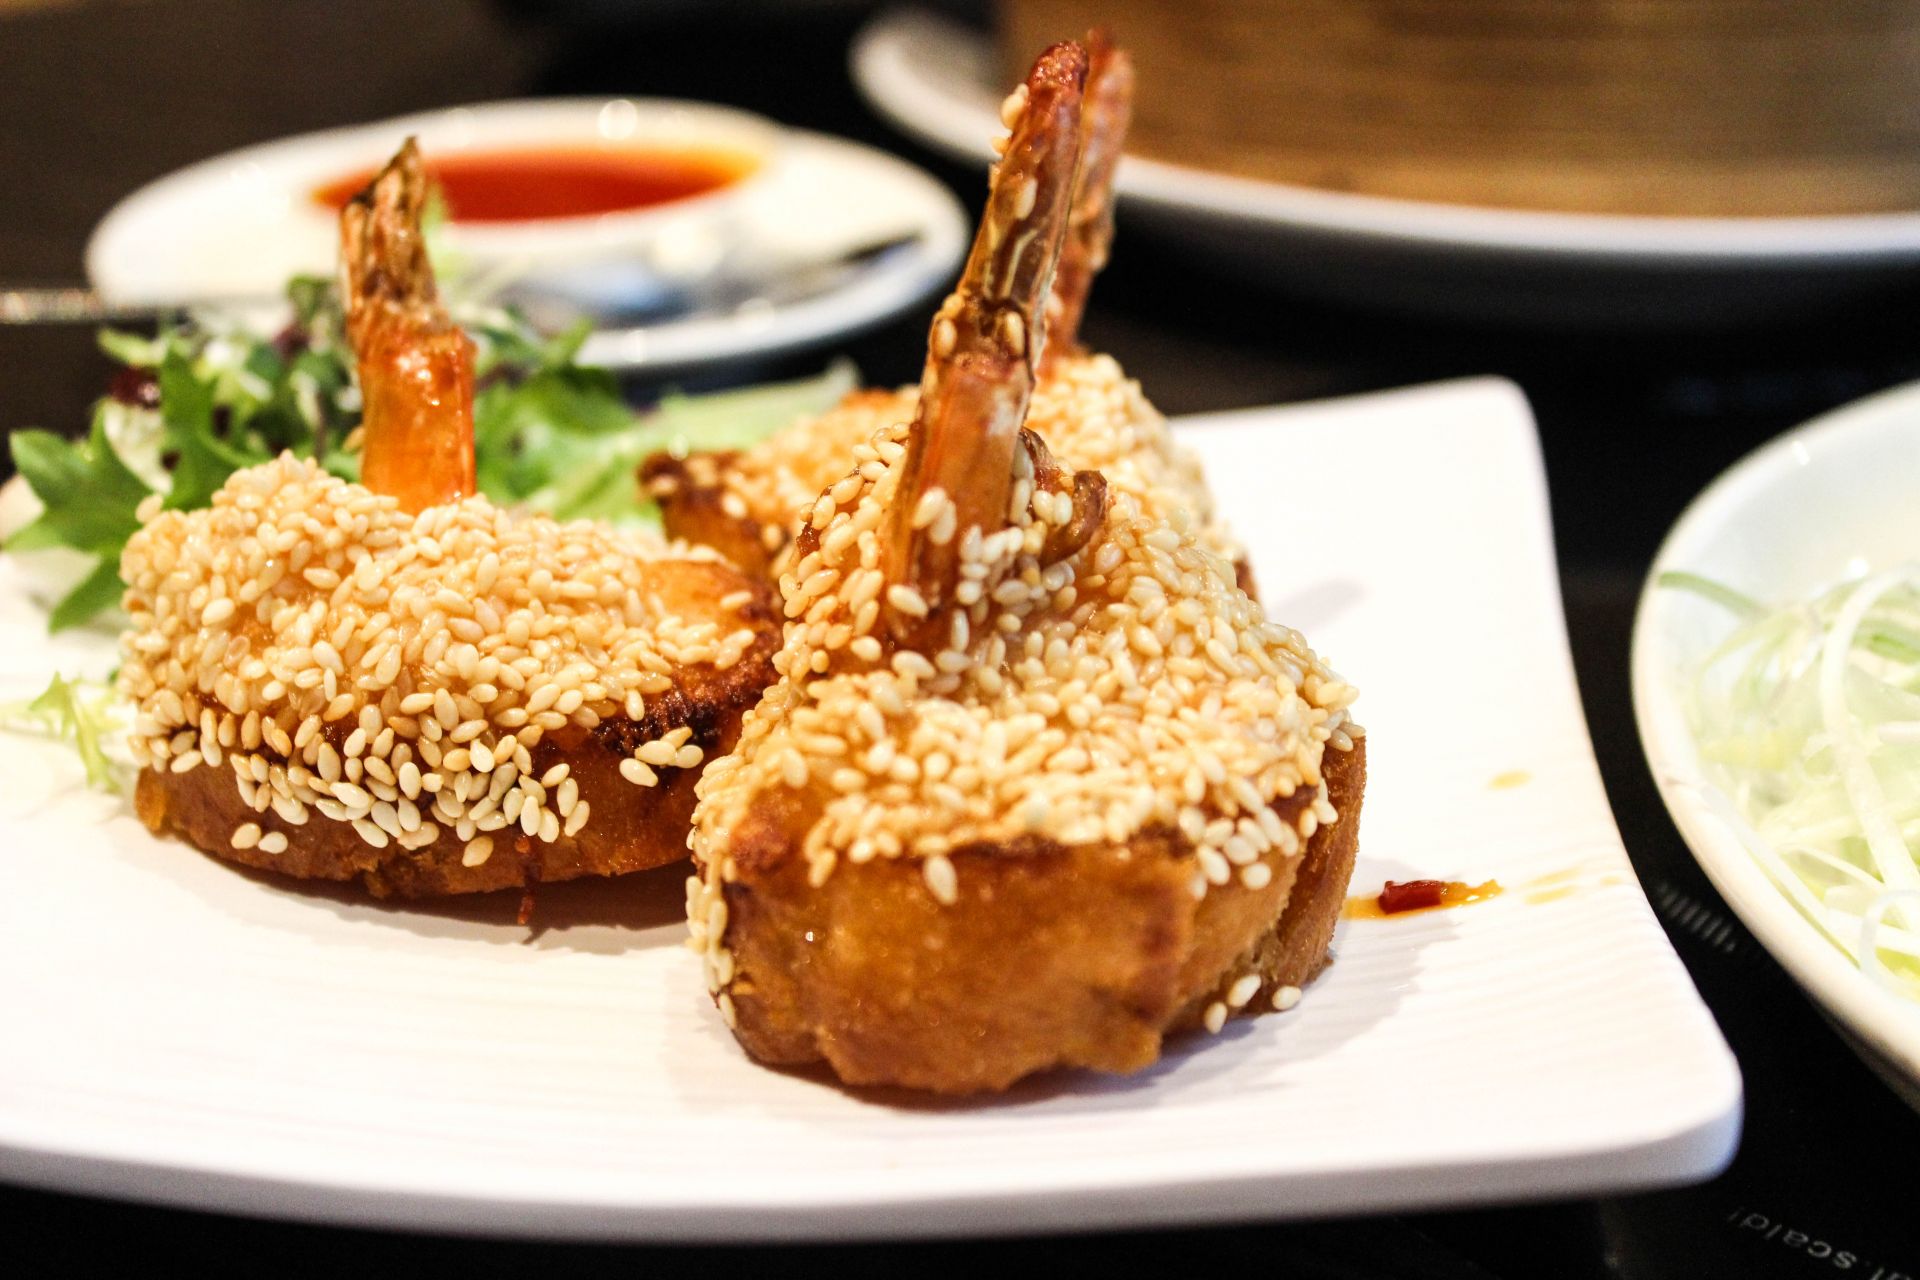 golden dragon restaurant, bang bang oriental review